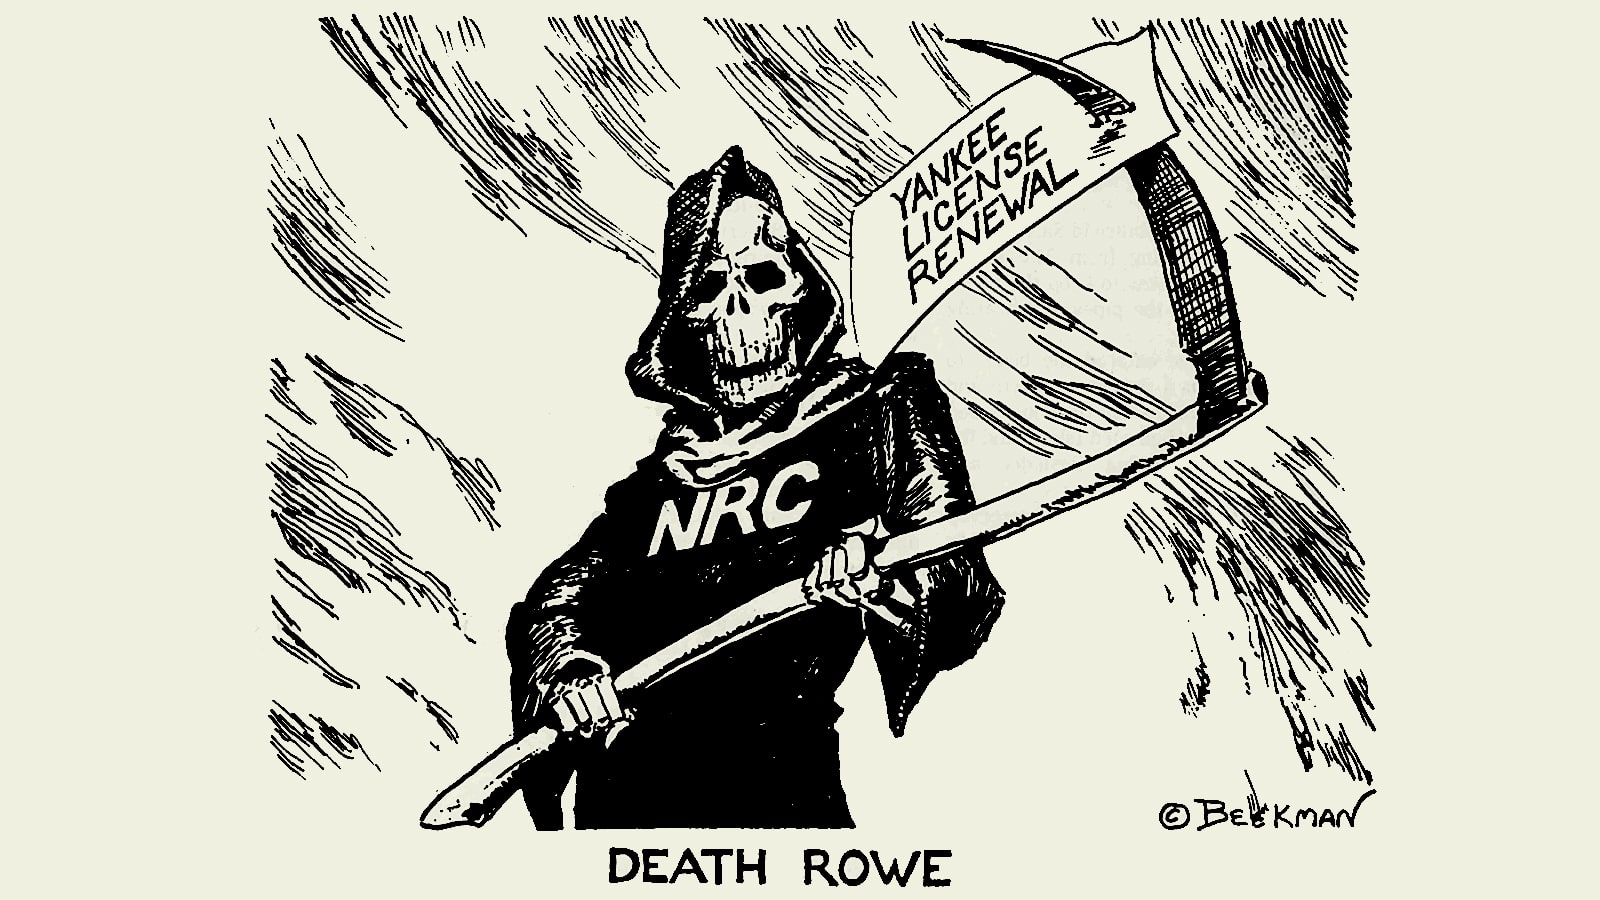 Bernie Sanders Calls For Yankee Rowe Nuclear Power Plant Shutdown In Rowe, MA